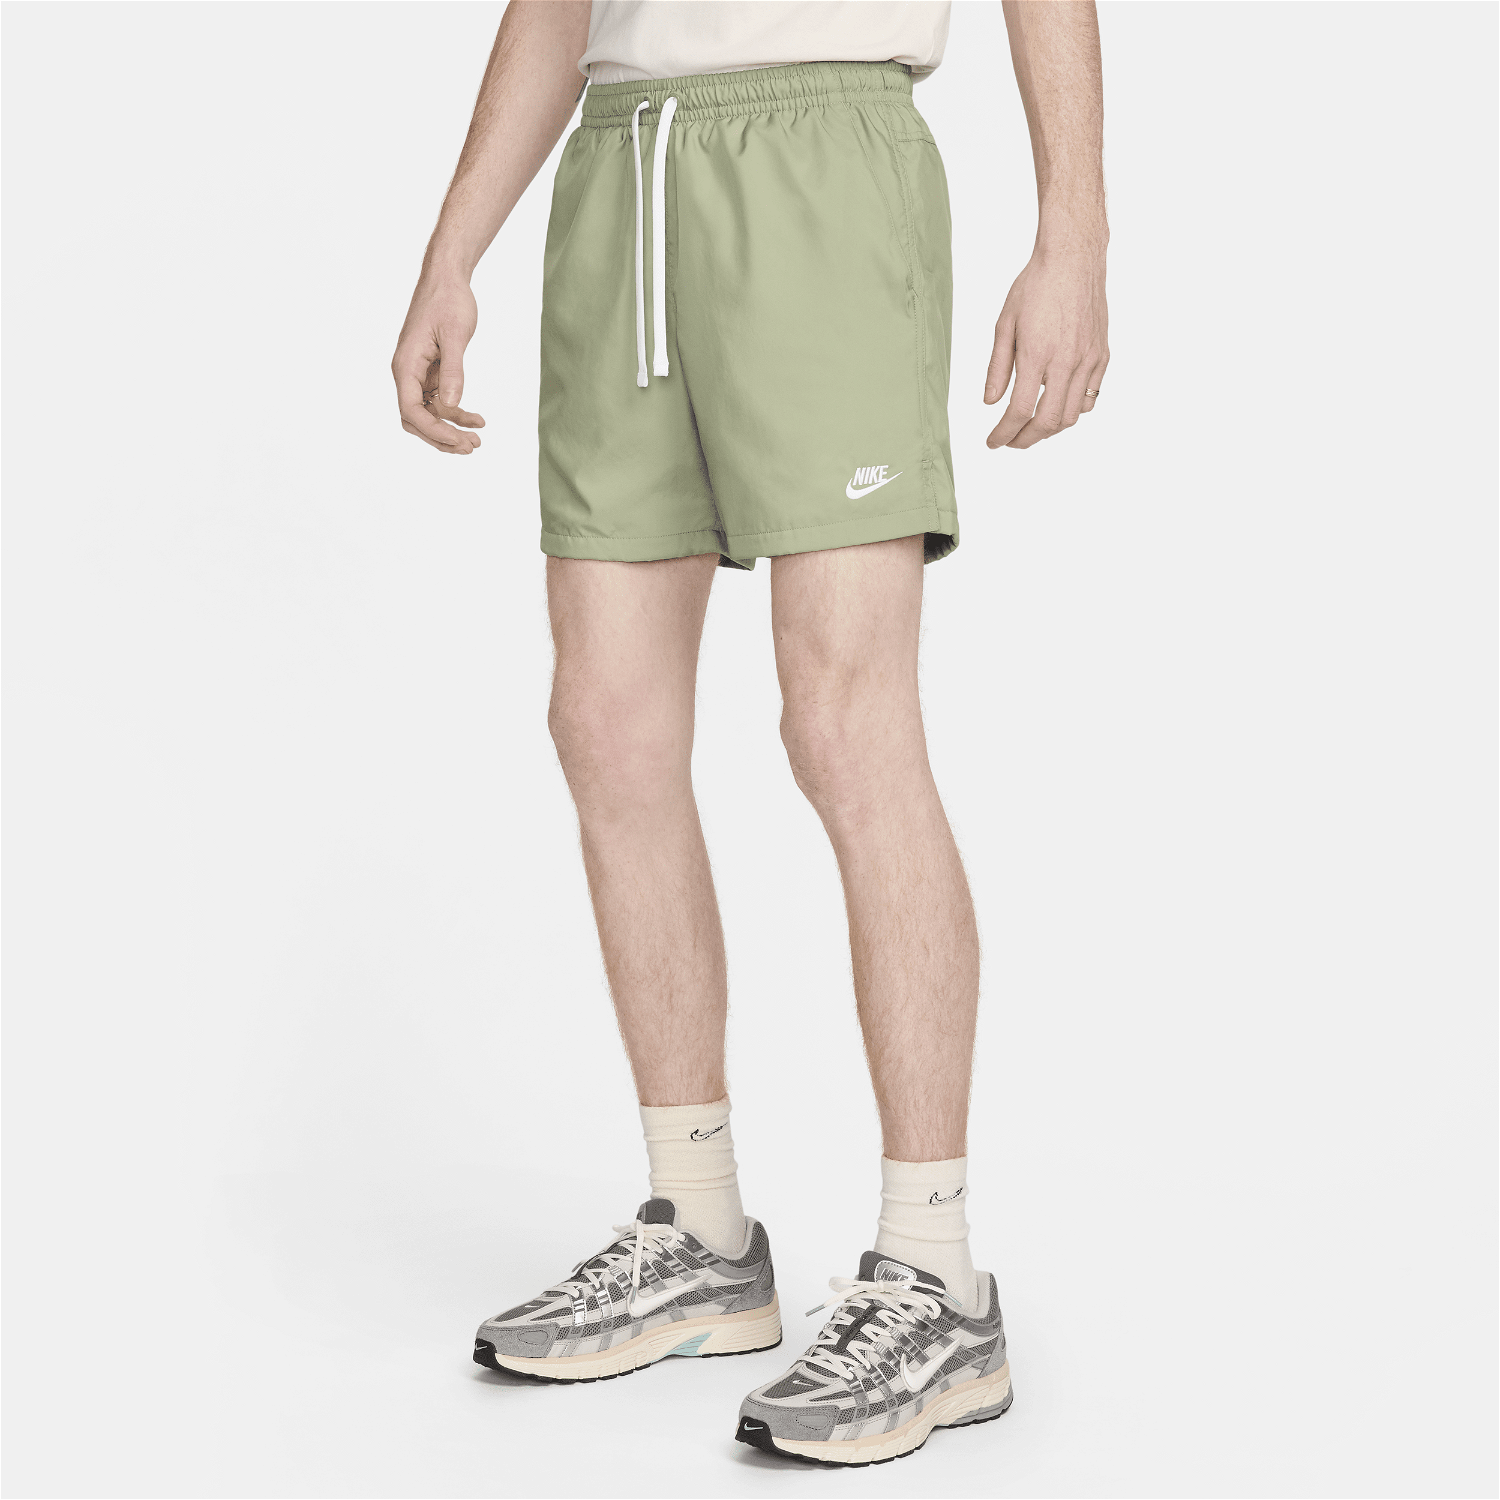 Rövidnadrág Nike Sportswear Shorts Zöld | AR2382-386, 1